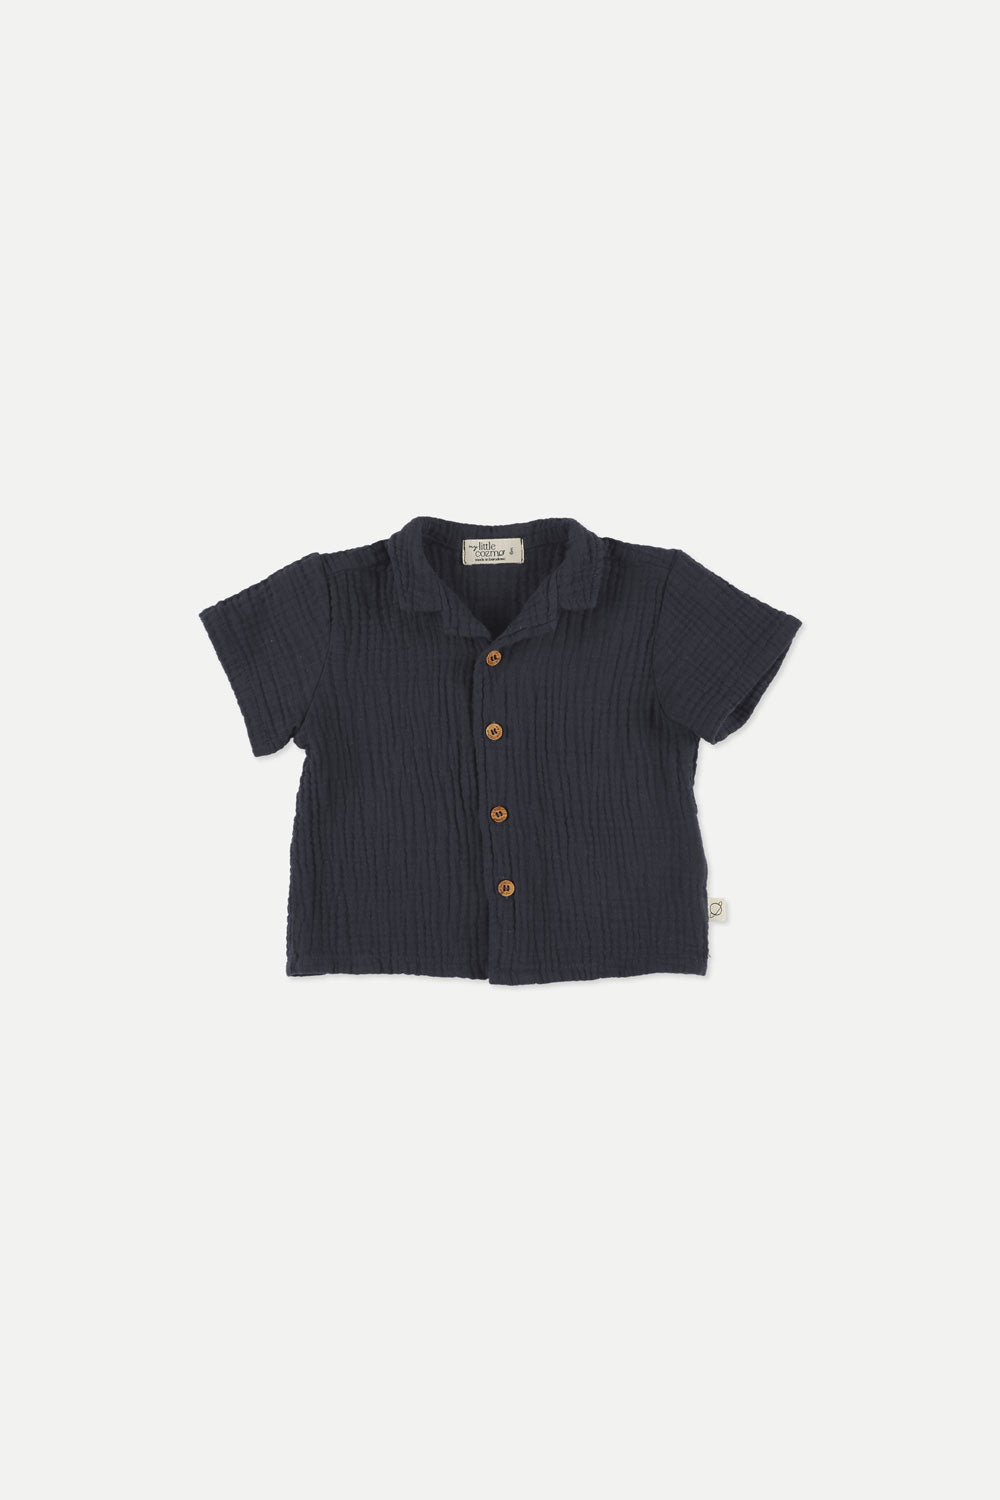 Shirt Baby Boy Pablo Navy - ملابس